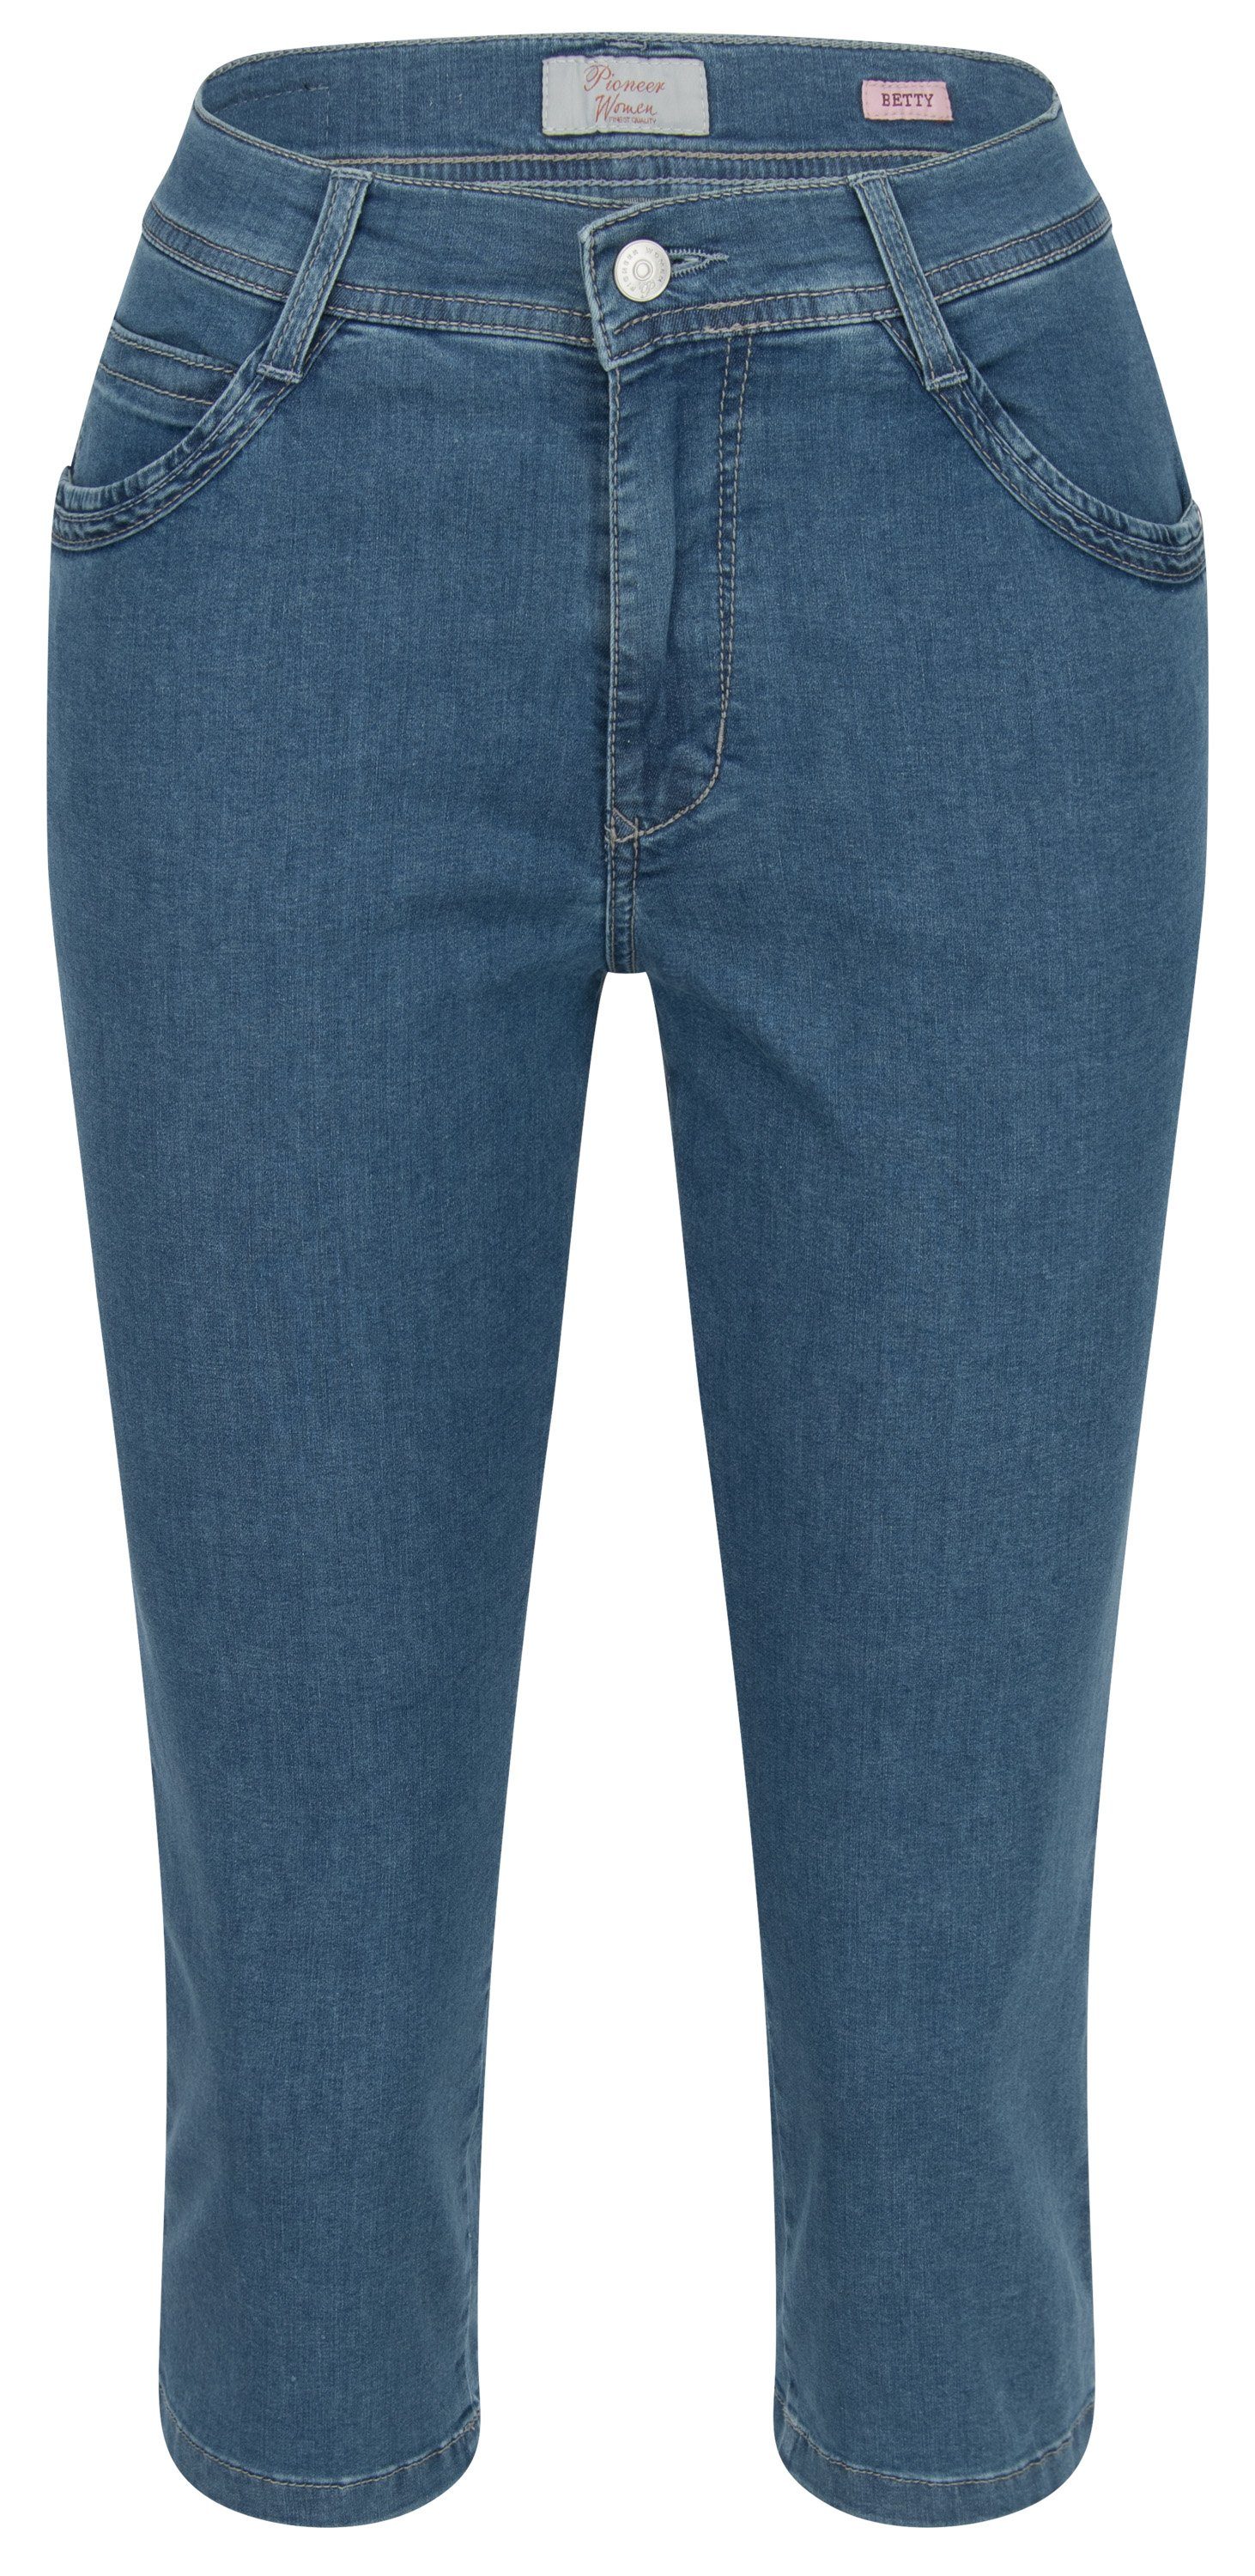 Pioneer Authentic Jeans Stretch-Jeans PIONEER - 3503 blue light BETTY 4005.6841 stonewash CAPRI POWERSTRETCH